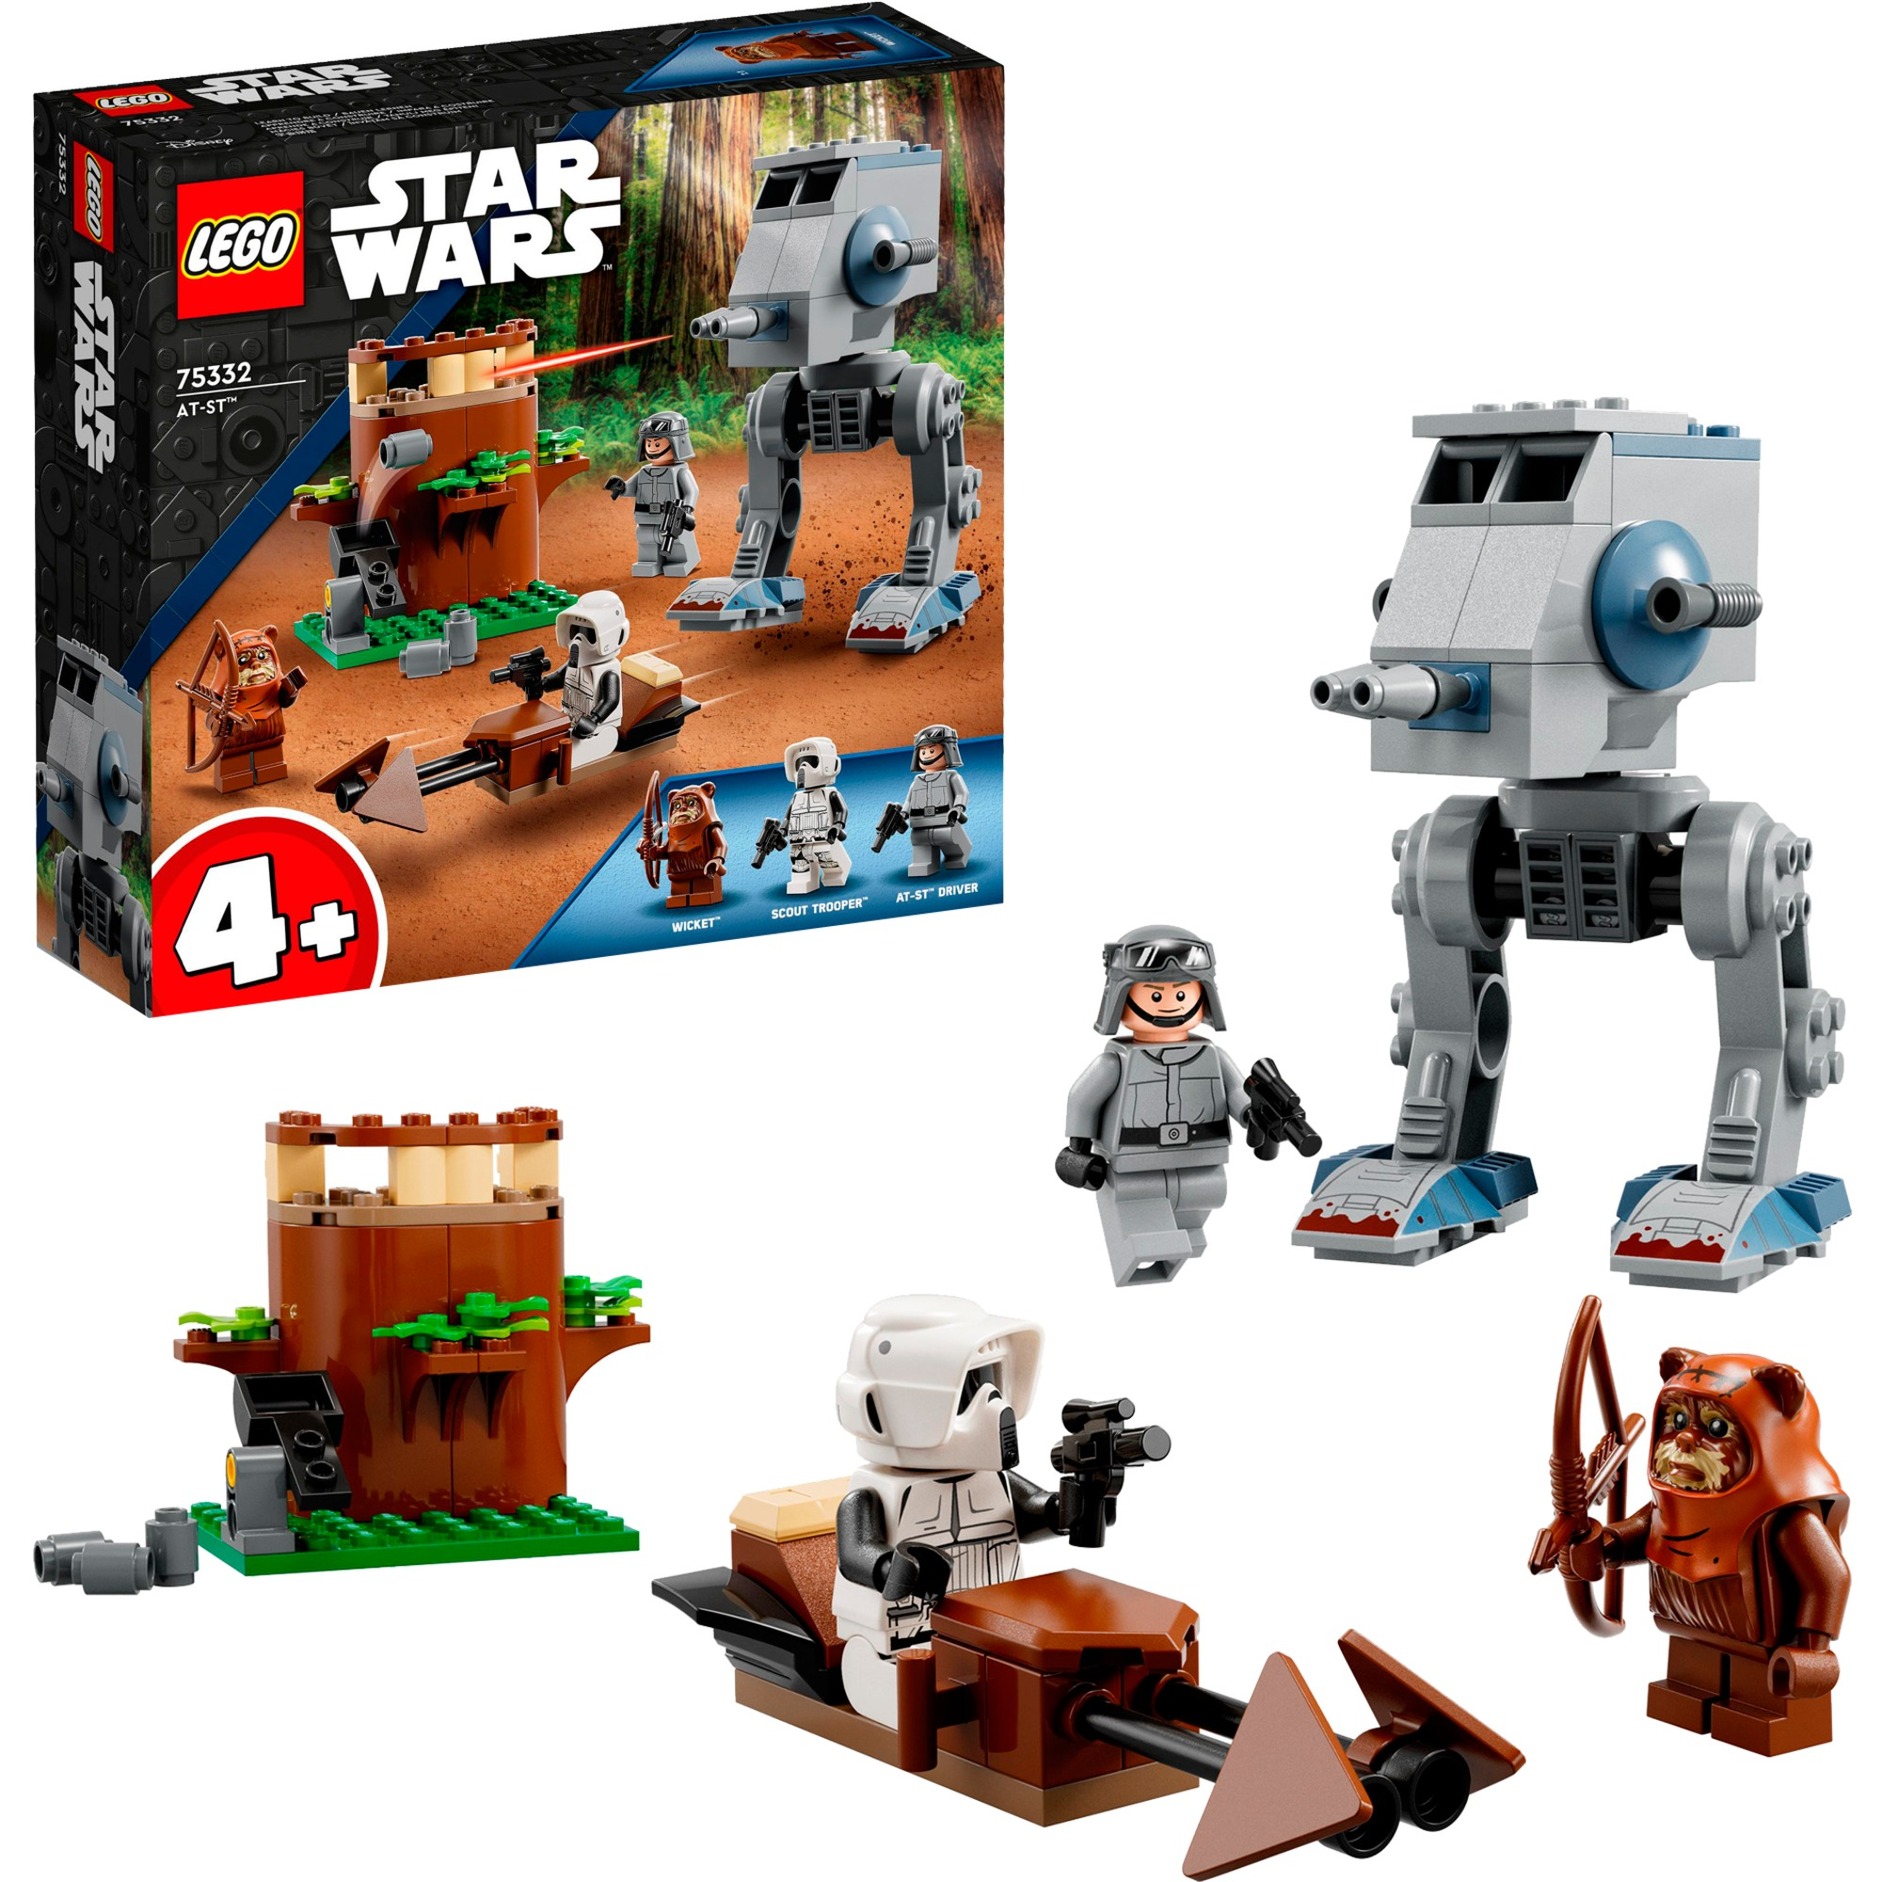 Spielzeug: Lego 75332 Star Wars AT-ST